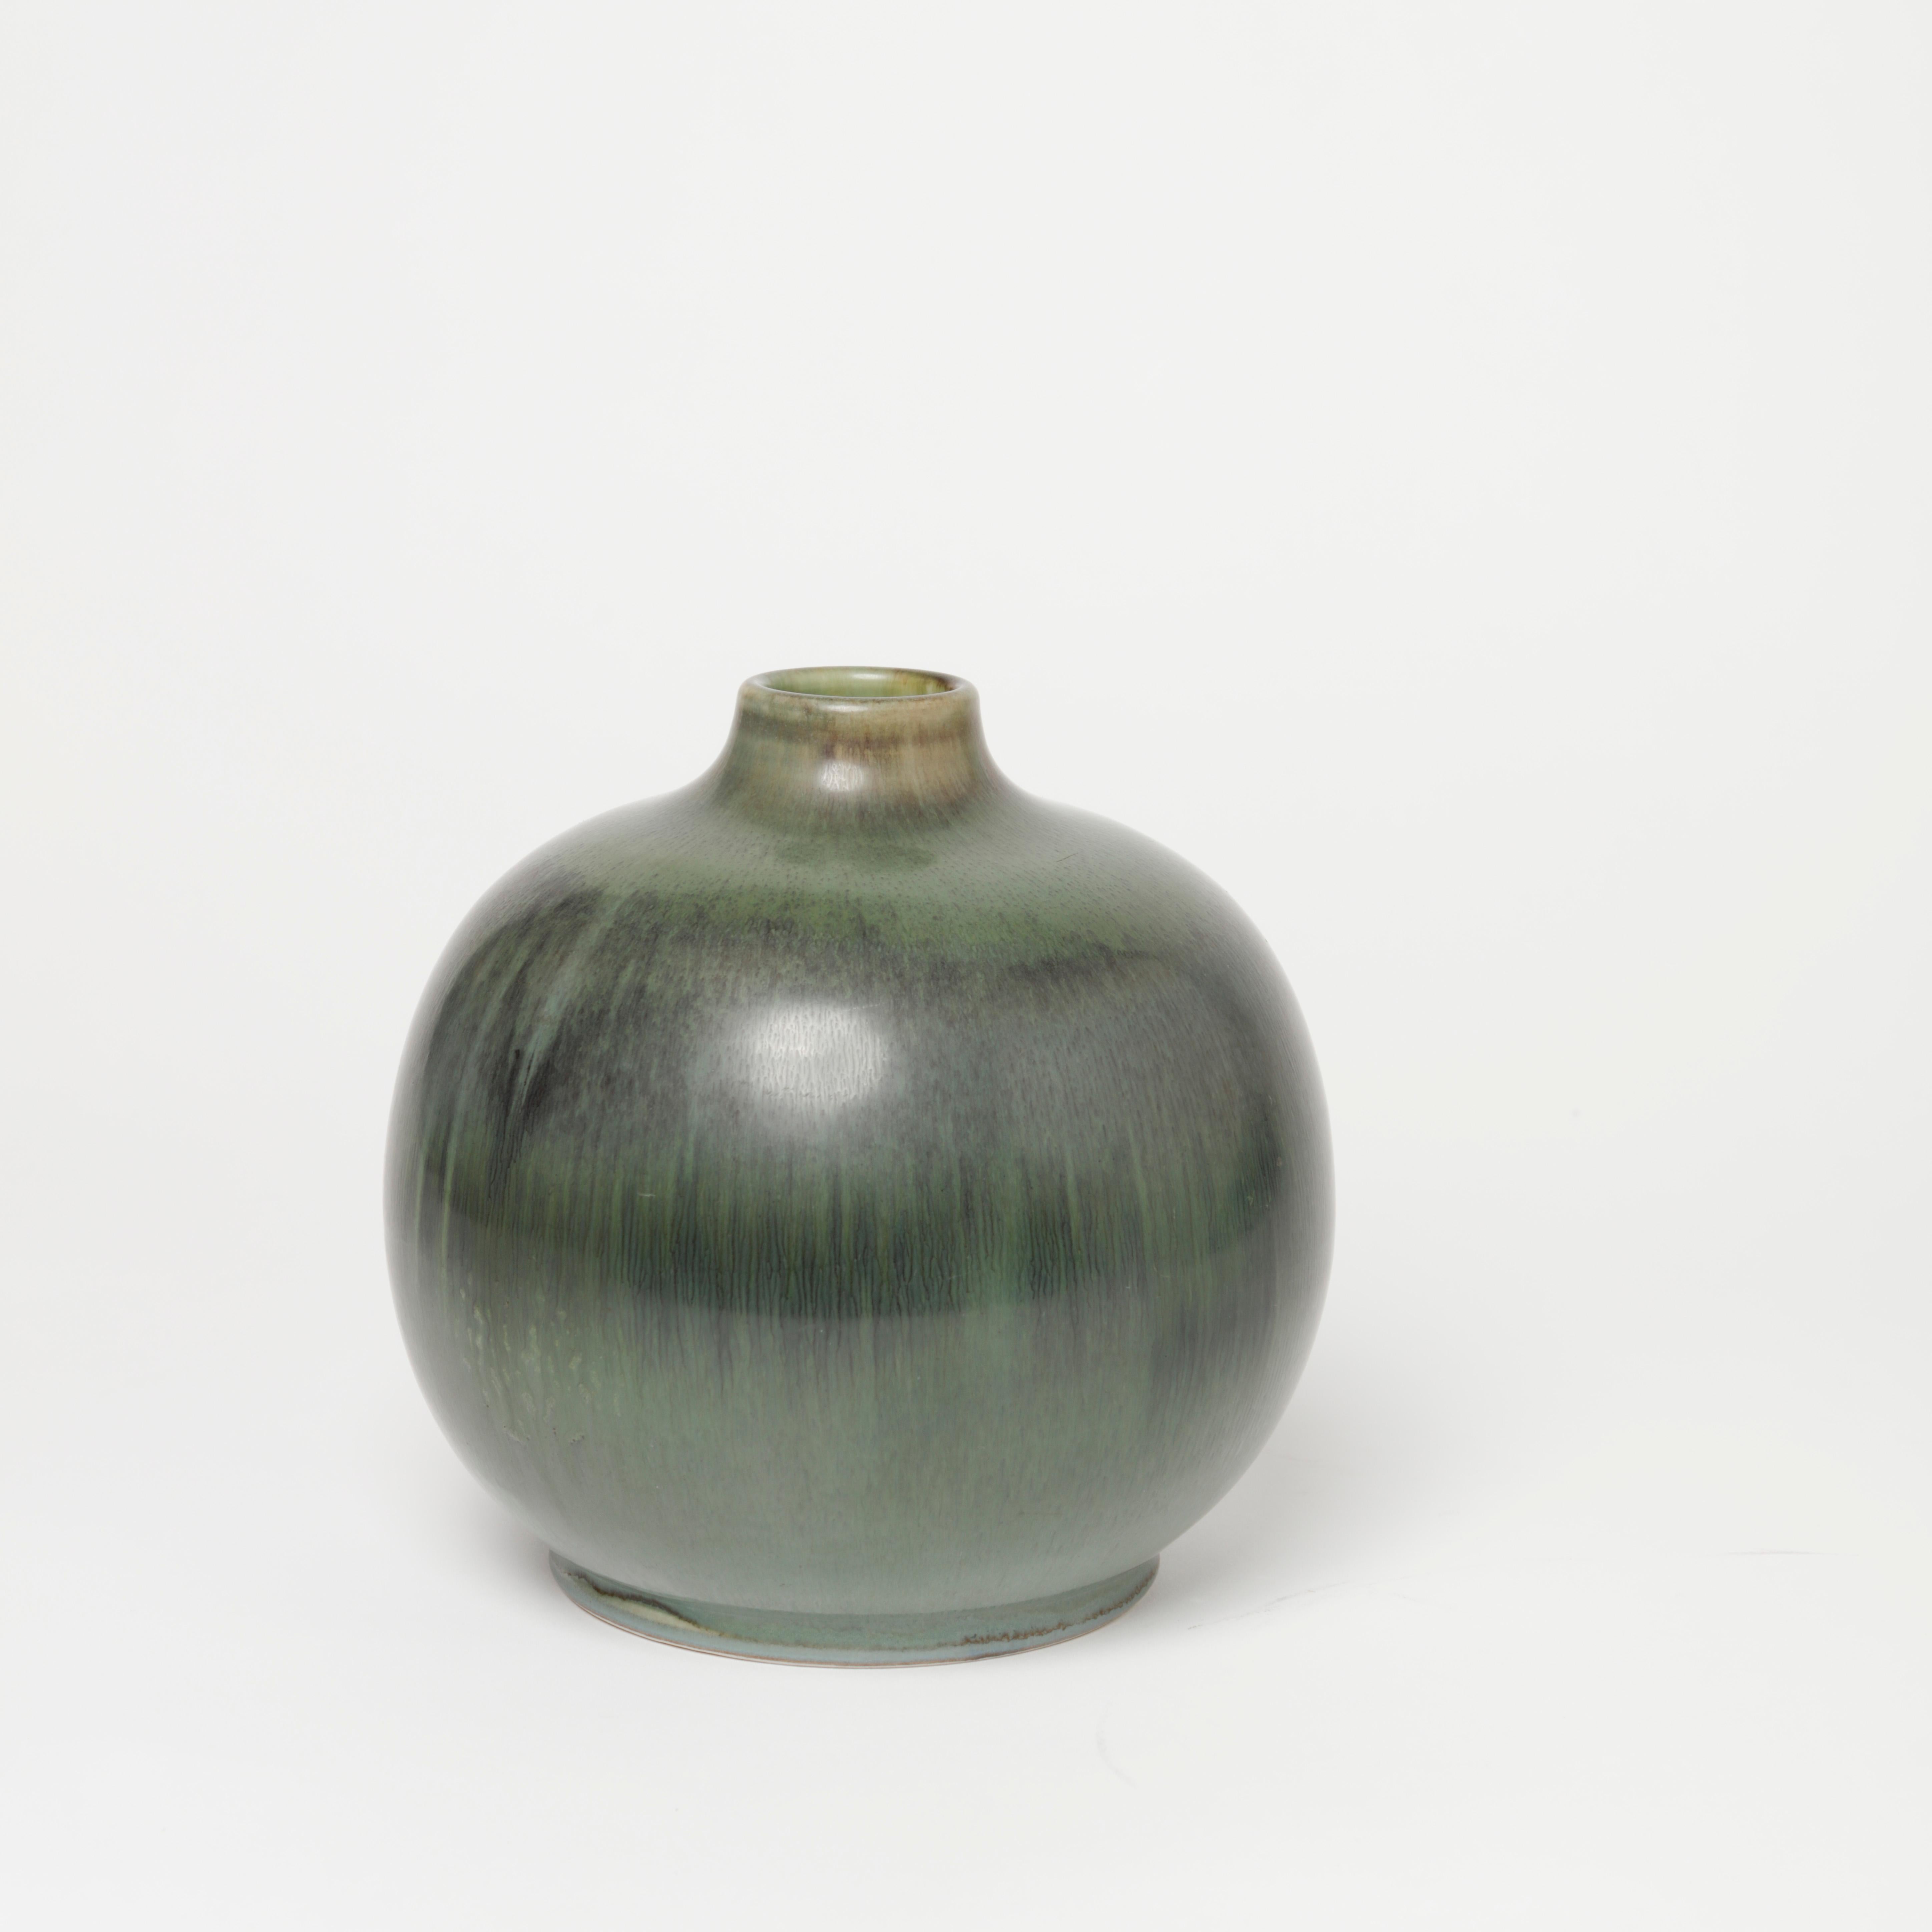 Stoneware vase by Gertrud Lönegren for Rörstrand 1940s with green glaze.
Measure: Height 17cm/6.7